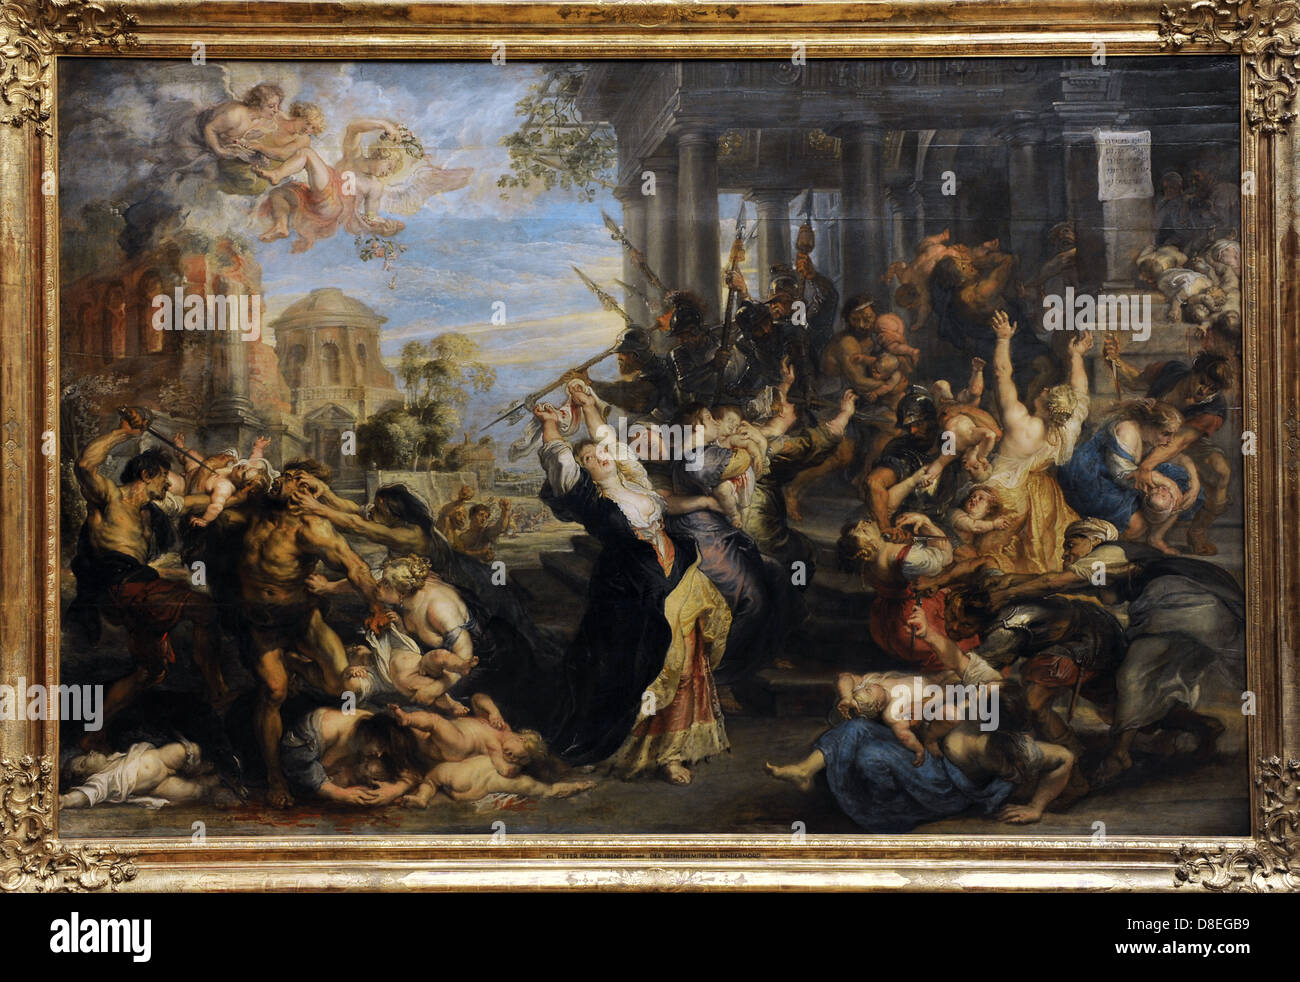 Peter Paul Rubens (1577-1640). German-born Flemish Baroque painter. Massacre of the Innocents, 1635-40. Stock Photo